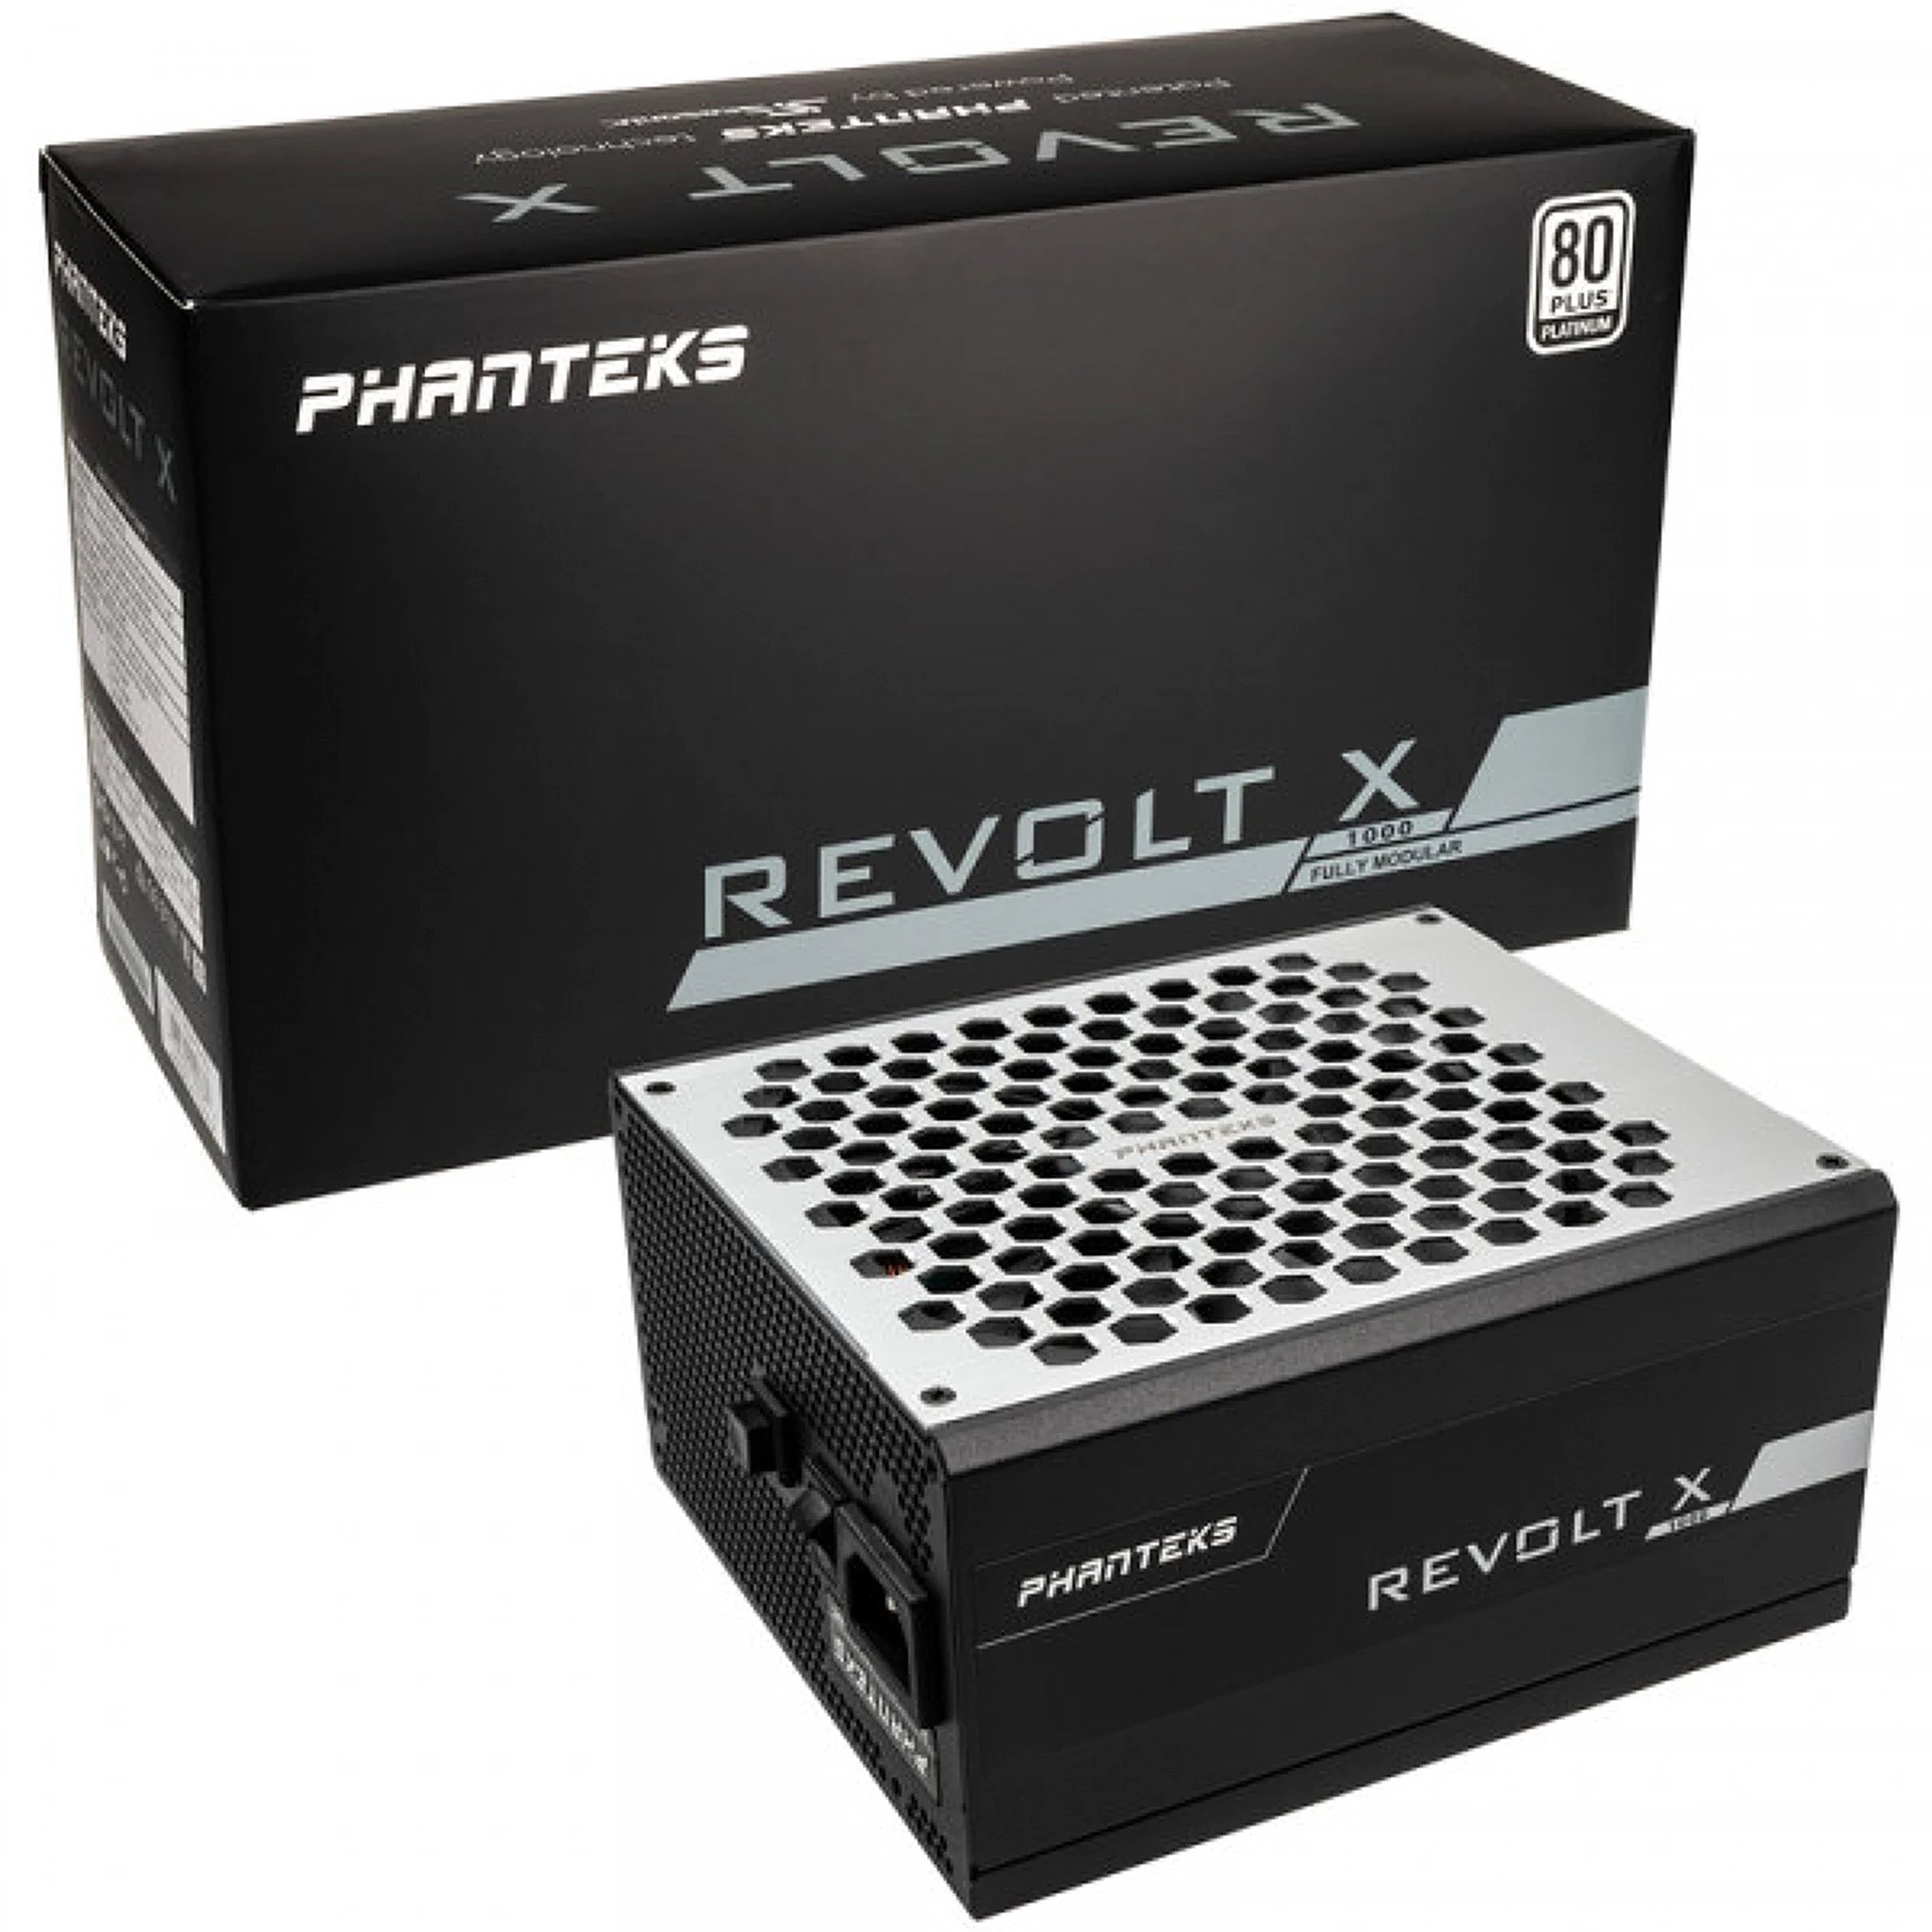 80 plus platinum. Блок питания Phanteks Revolt Pro PH-p1000gc. Phanteks Revolt x 1200w. Phanteks Revolt Pro 1000w. Блок питания Revolt x PH-p1200ps Platinum 1200 w 80 Plus Platinum.